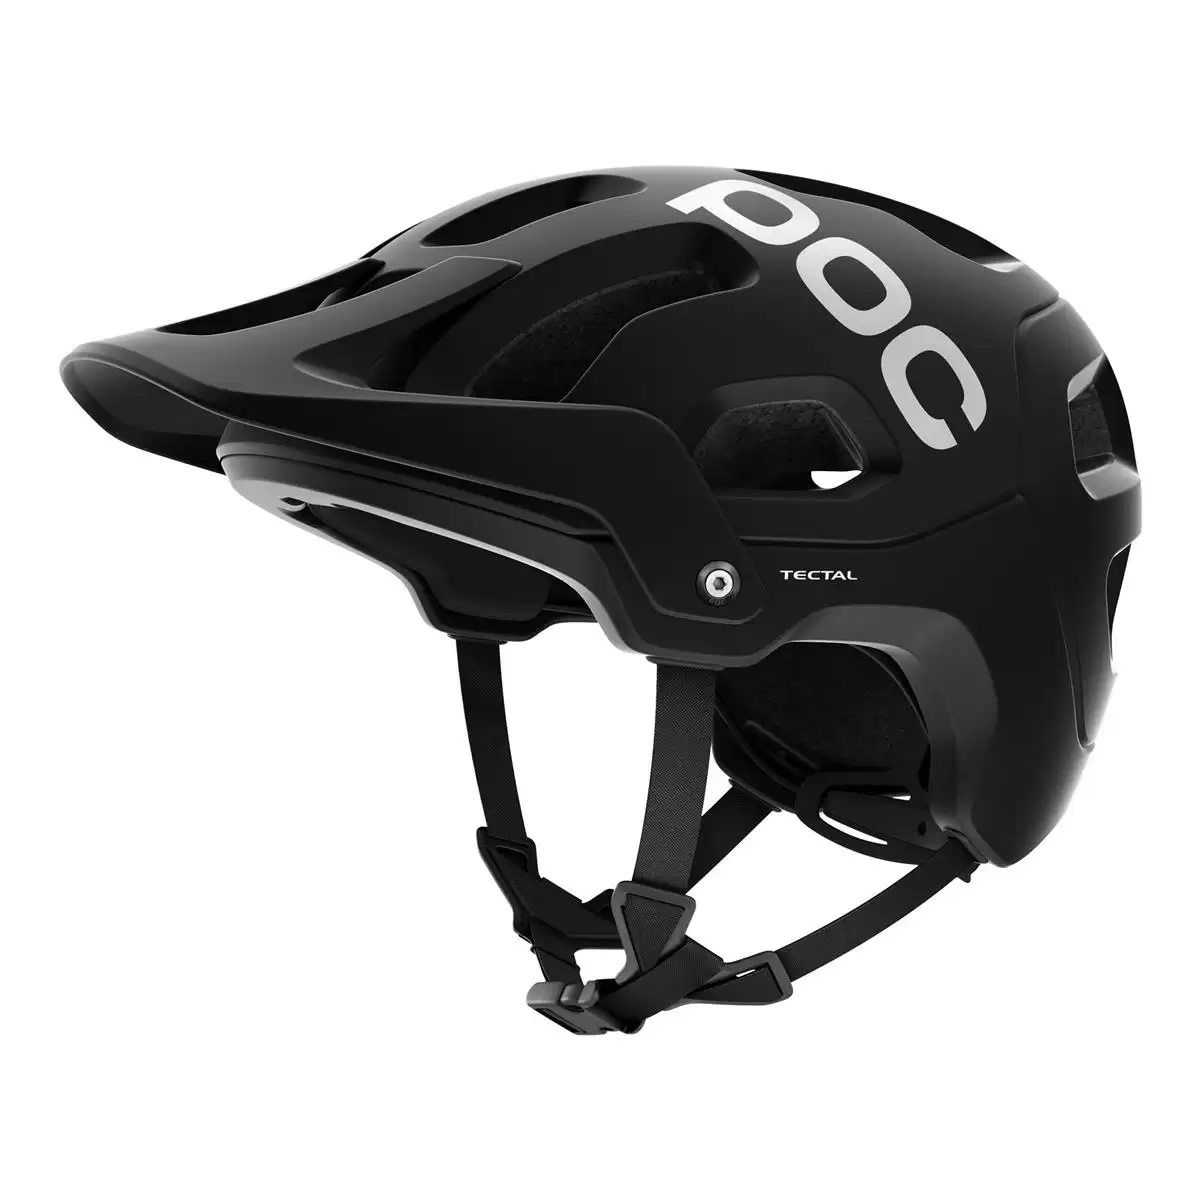 Enduro helmet Tectal black size XL-XXL (59-62cm) - image